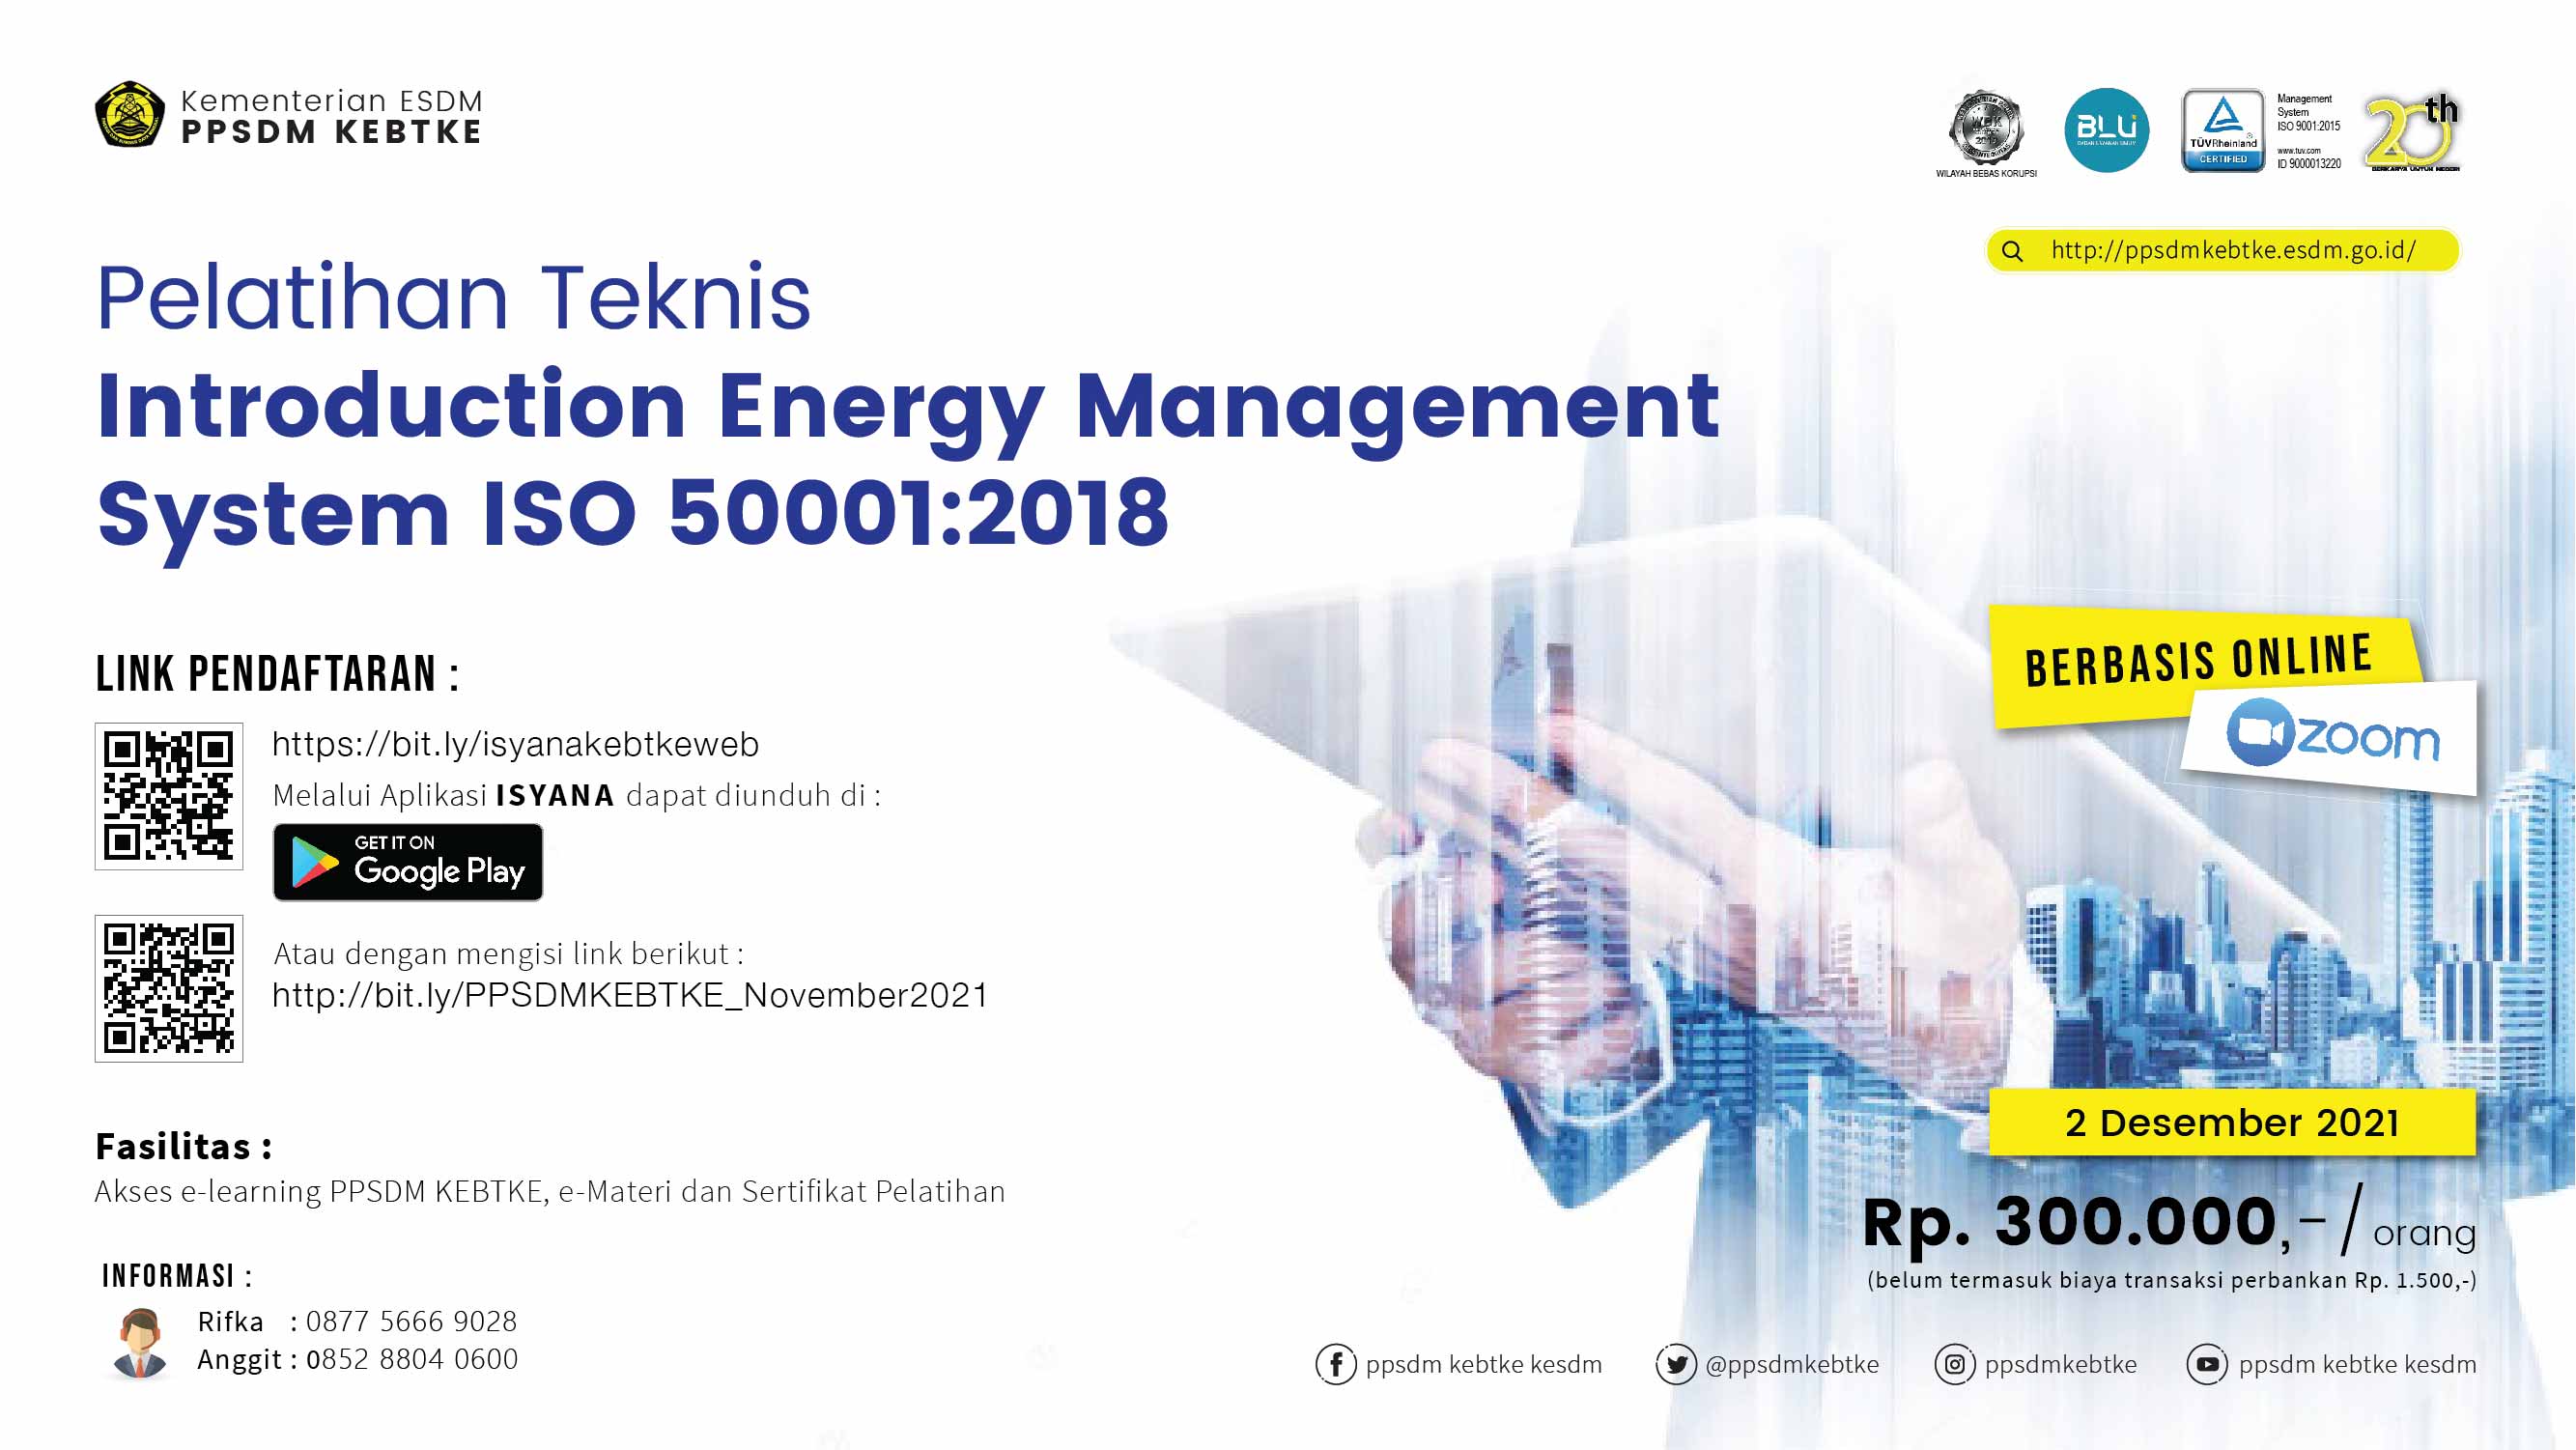 Pelatihan Teknis Introduction Energy Management System ISO 50001:2018 (2 Desember 2021)